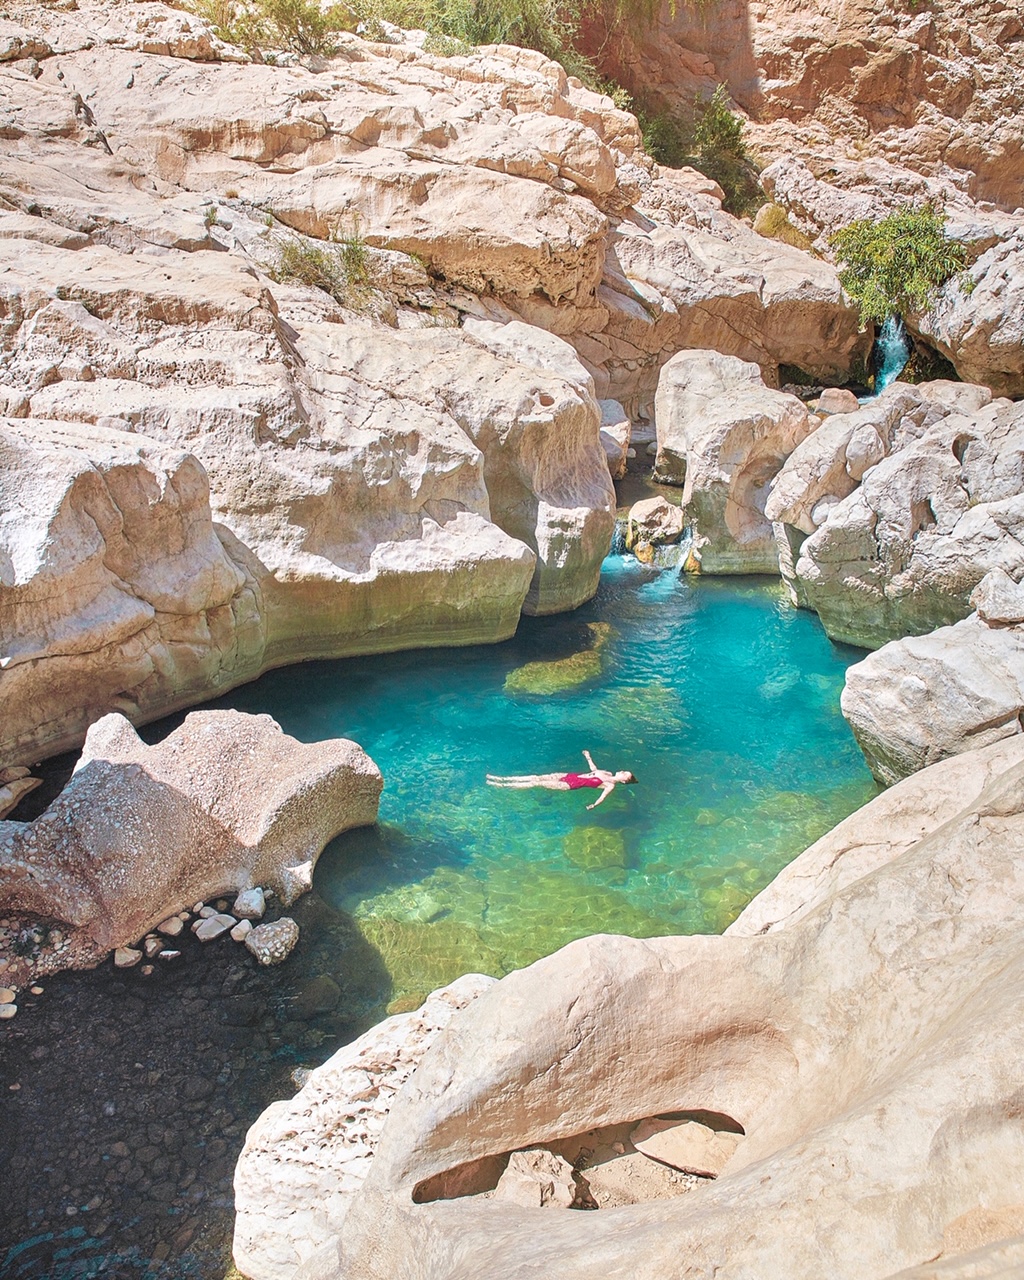 Swimming Wadi Bani Khalid, one of the prettiest wadis in Oman